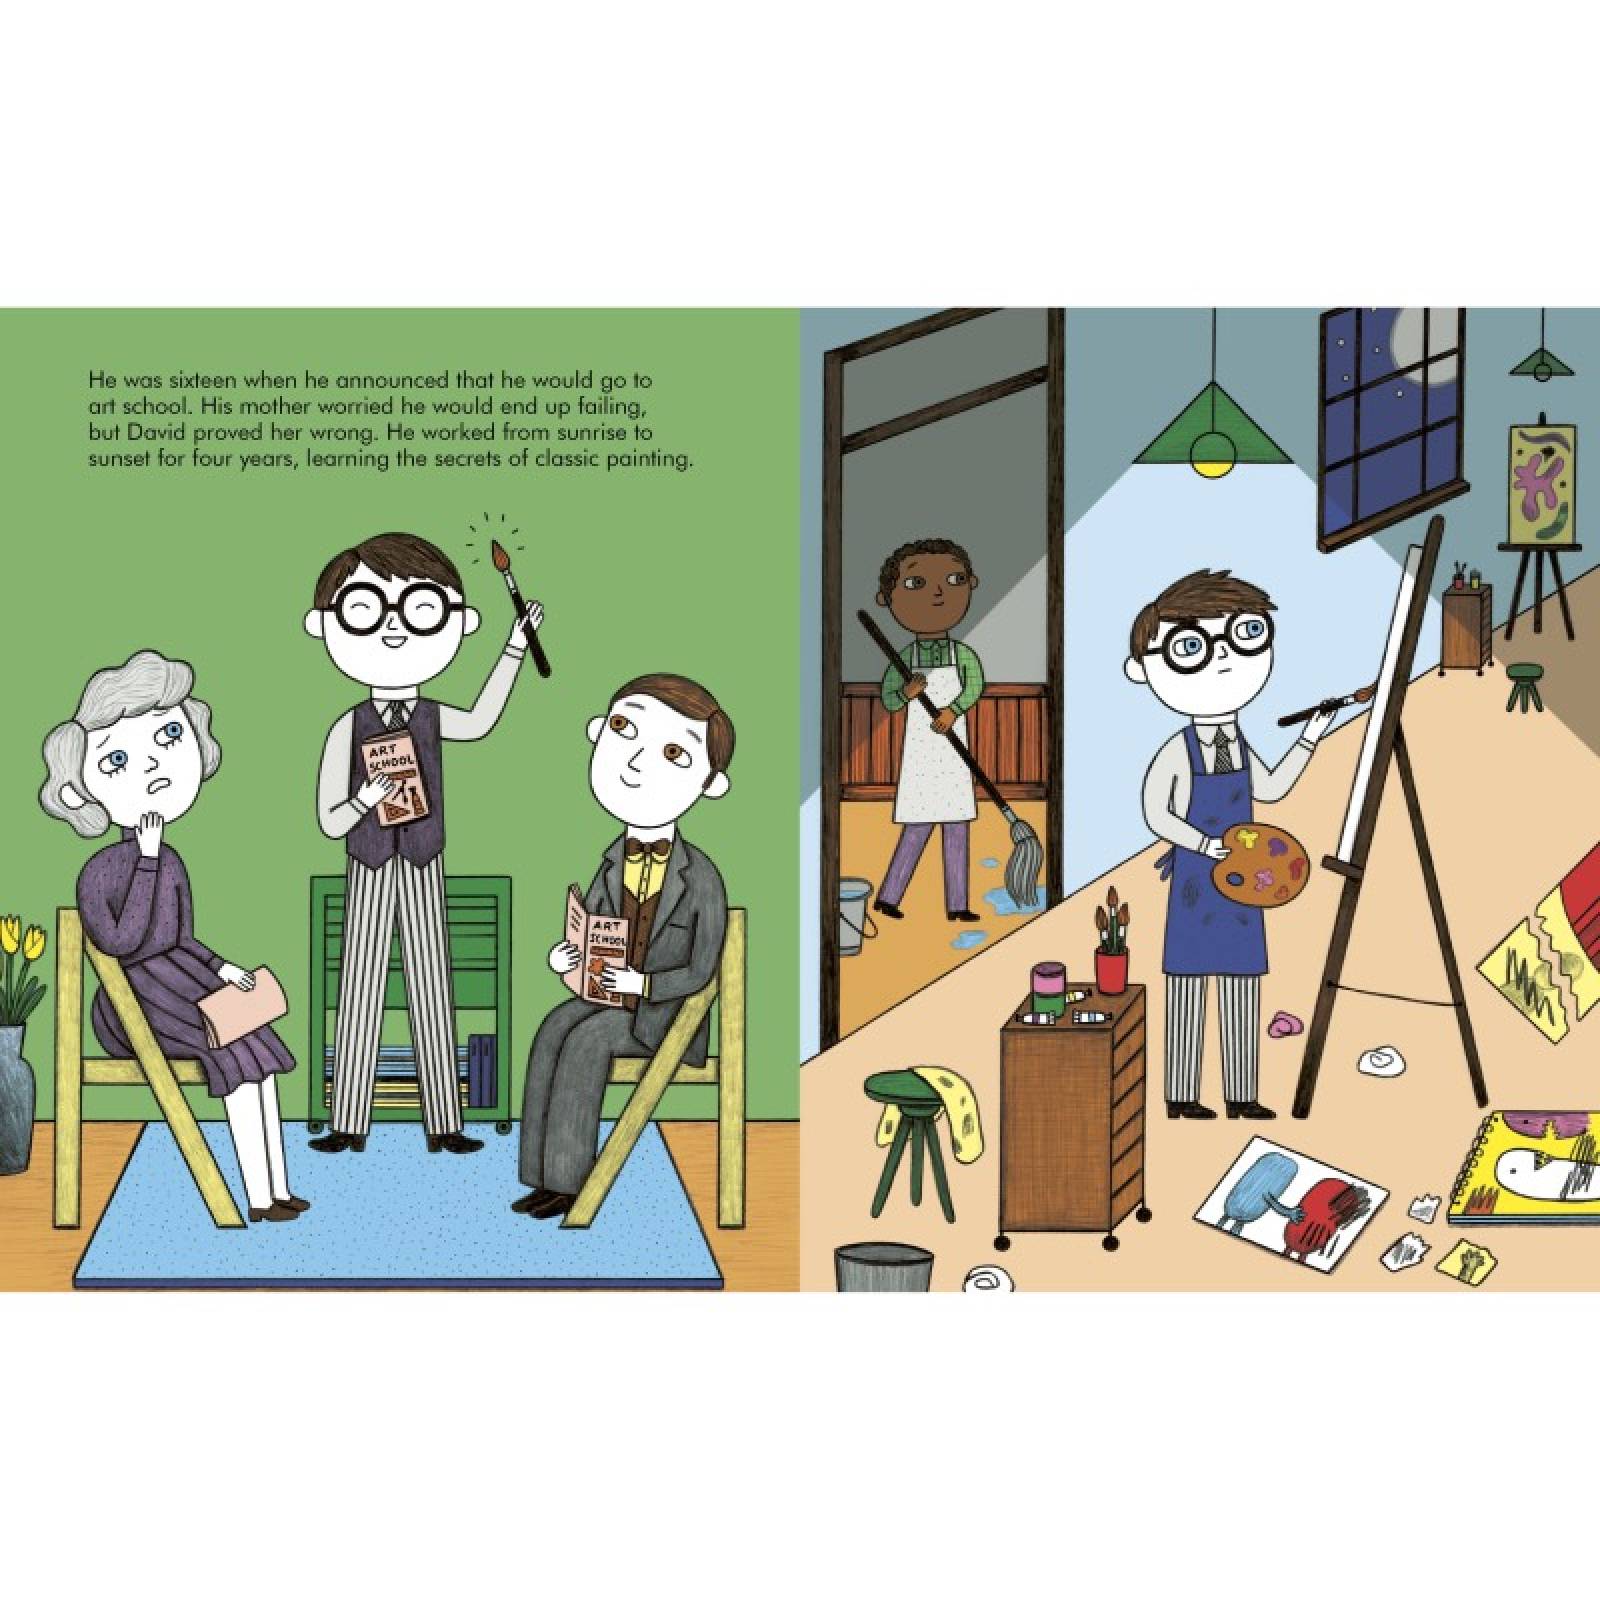 David Hockney: Little People, Big Dreams - Hardback Book thumbnails